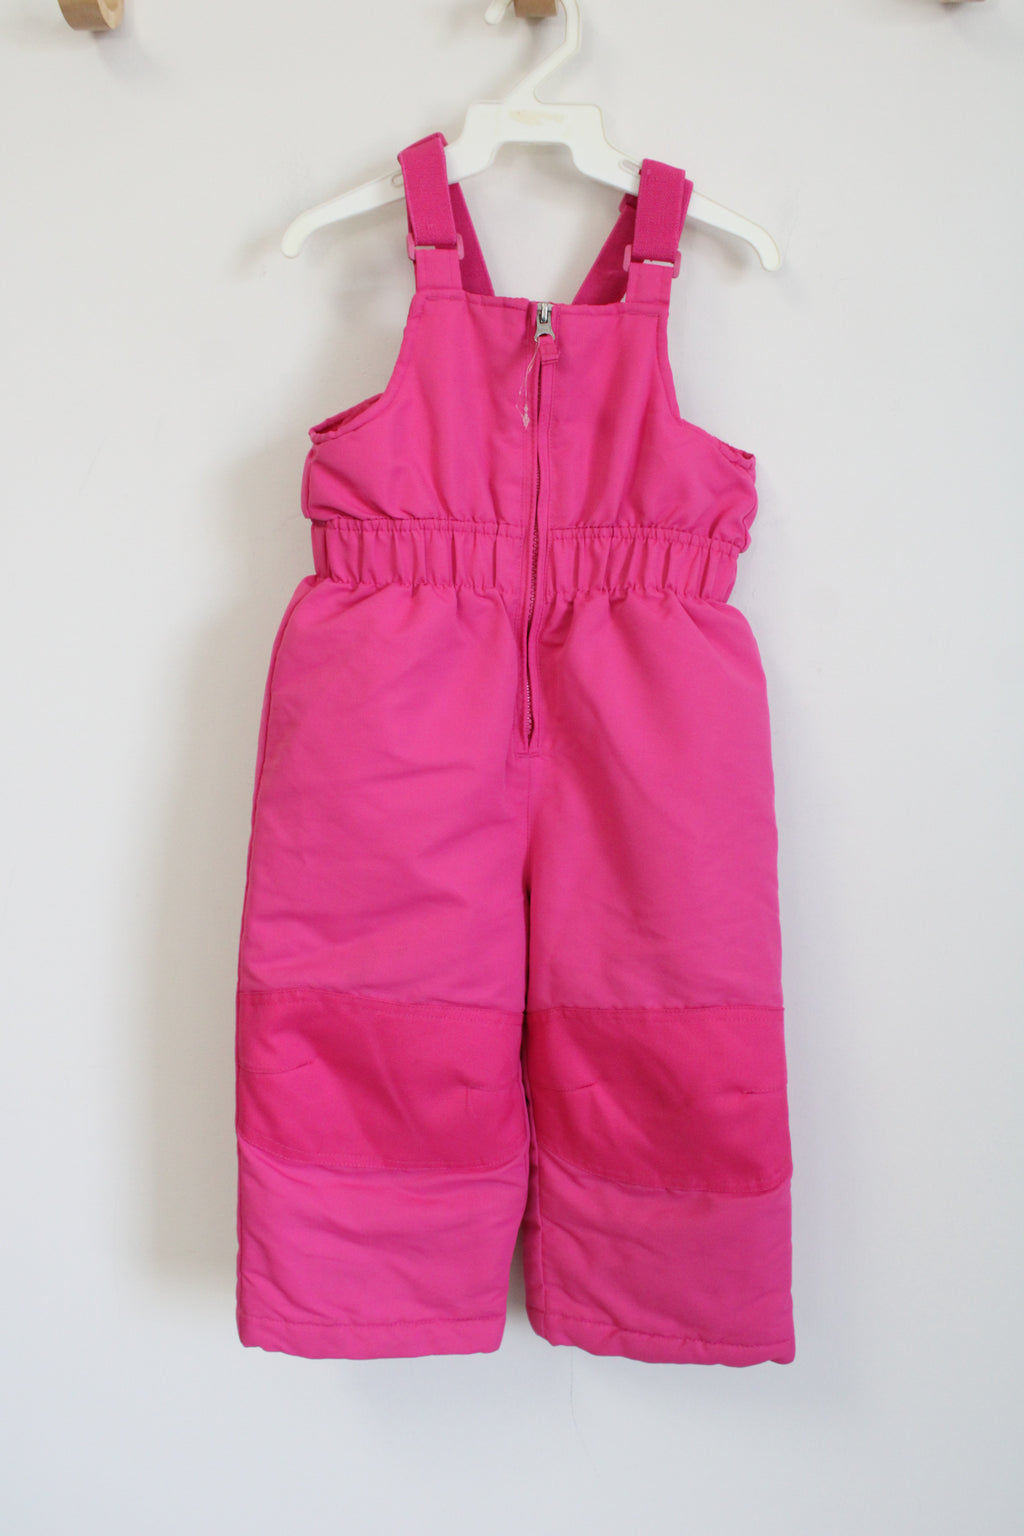 HealthTex Pink Snow Bib Suit | 2T